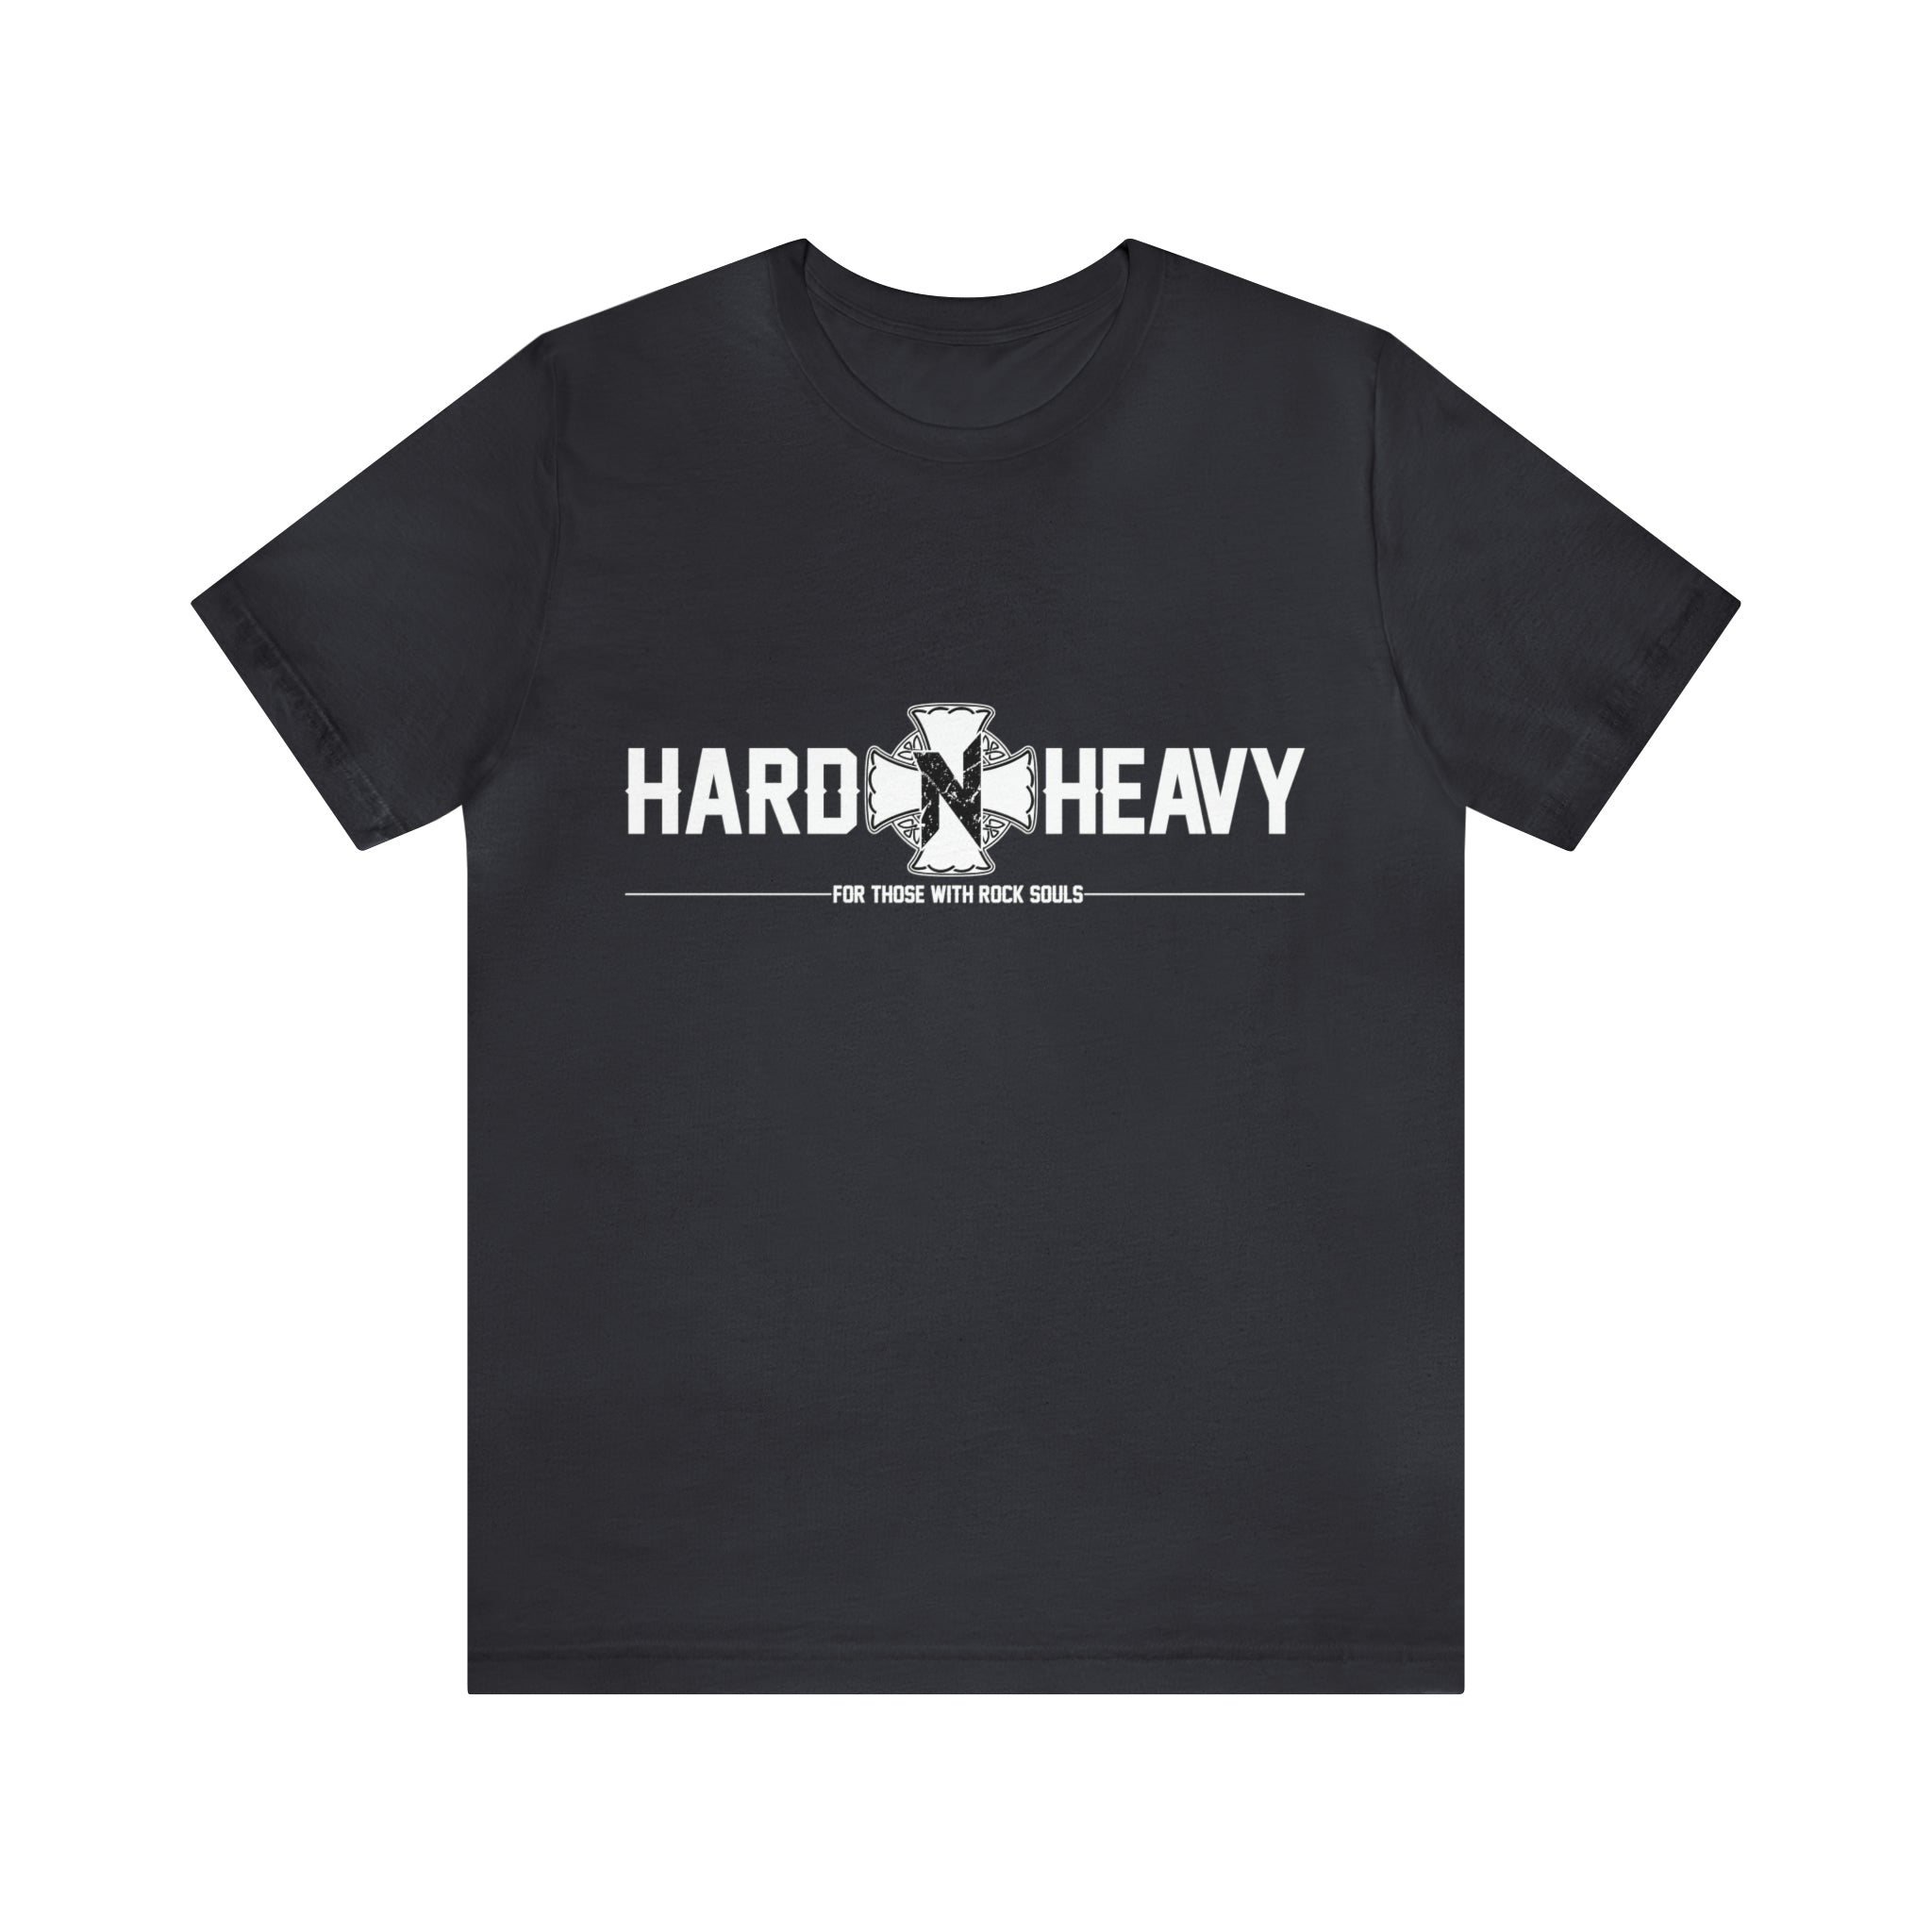 HARD'N'HEAVY | Gothic, Rock & Alternative Fashion Store